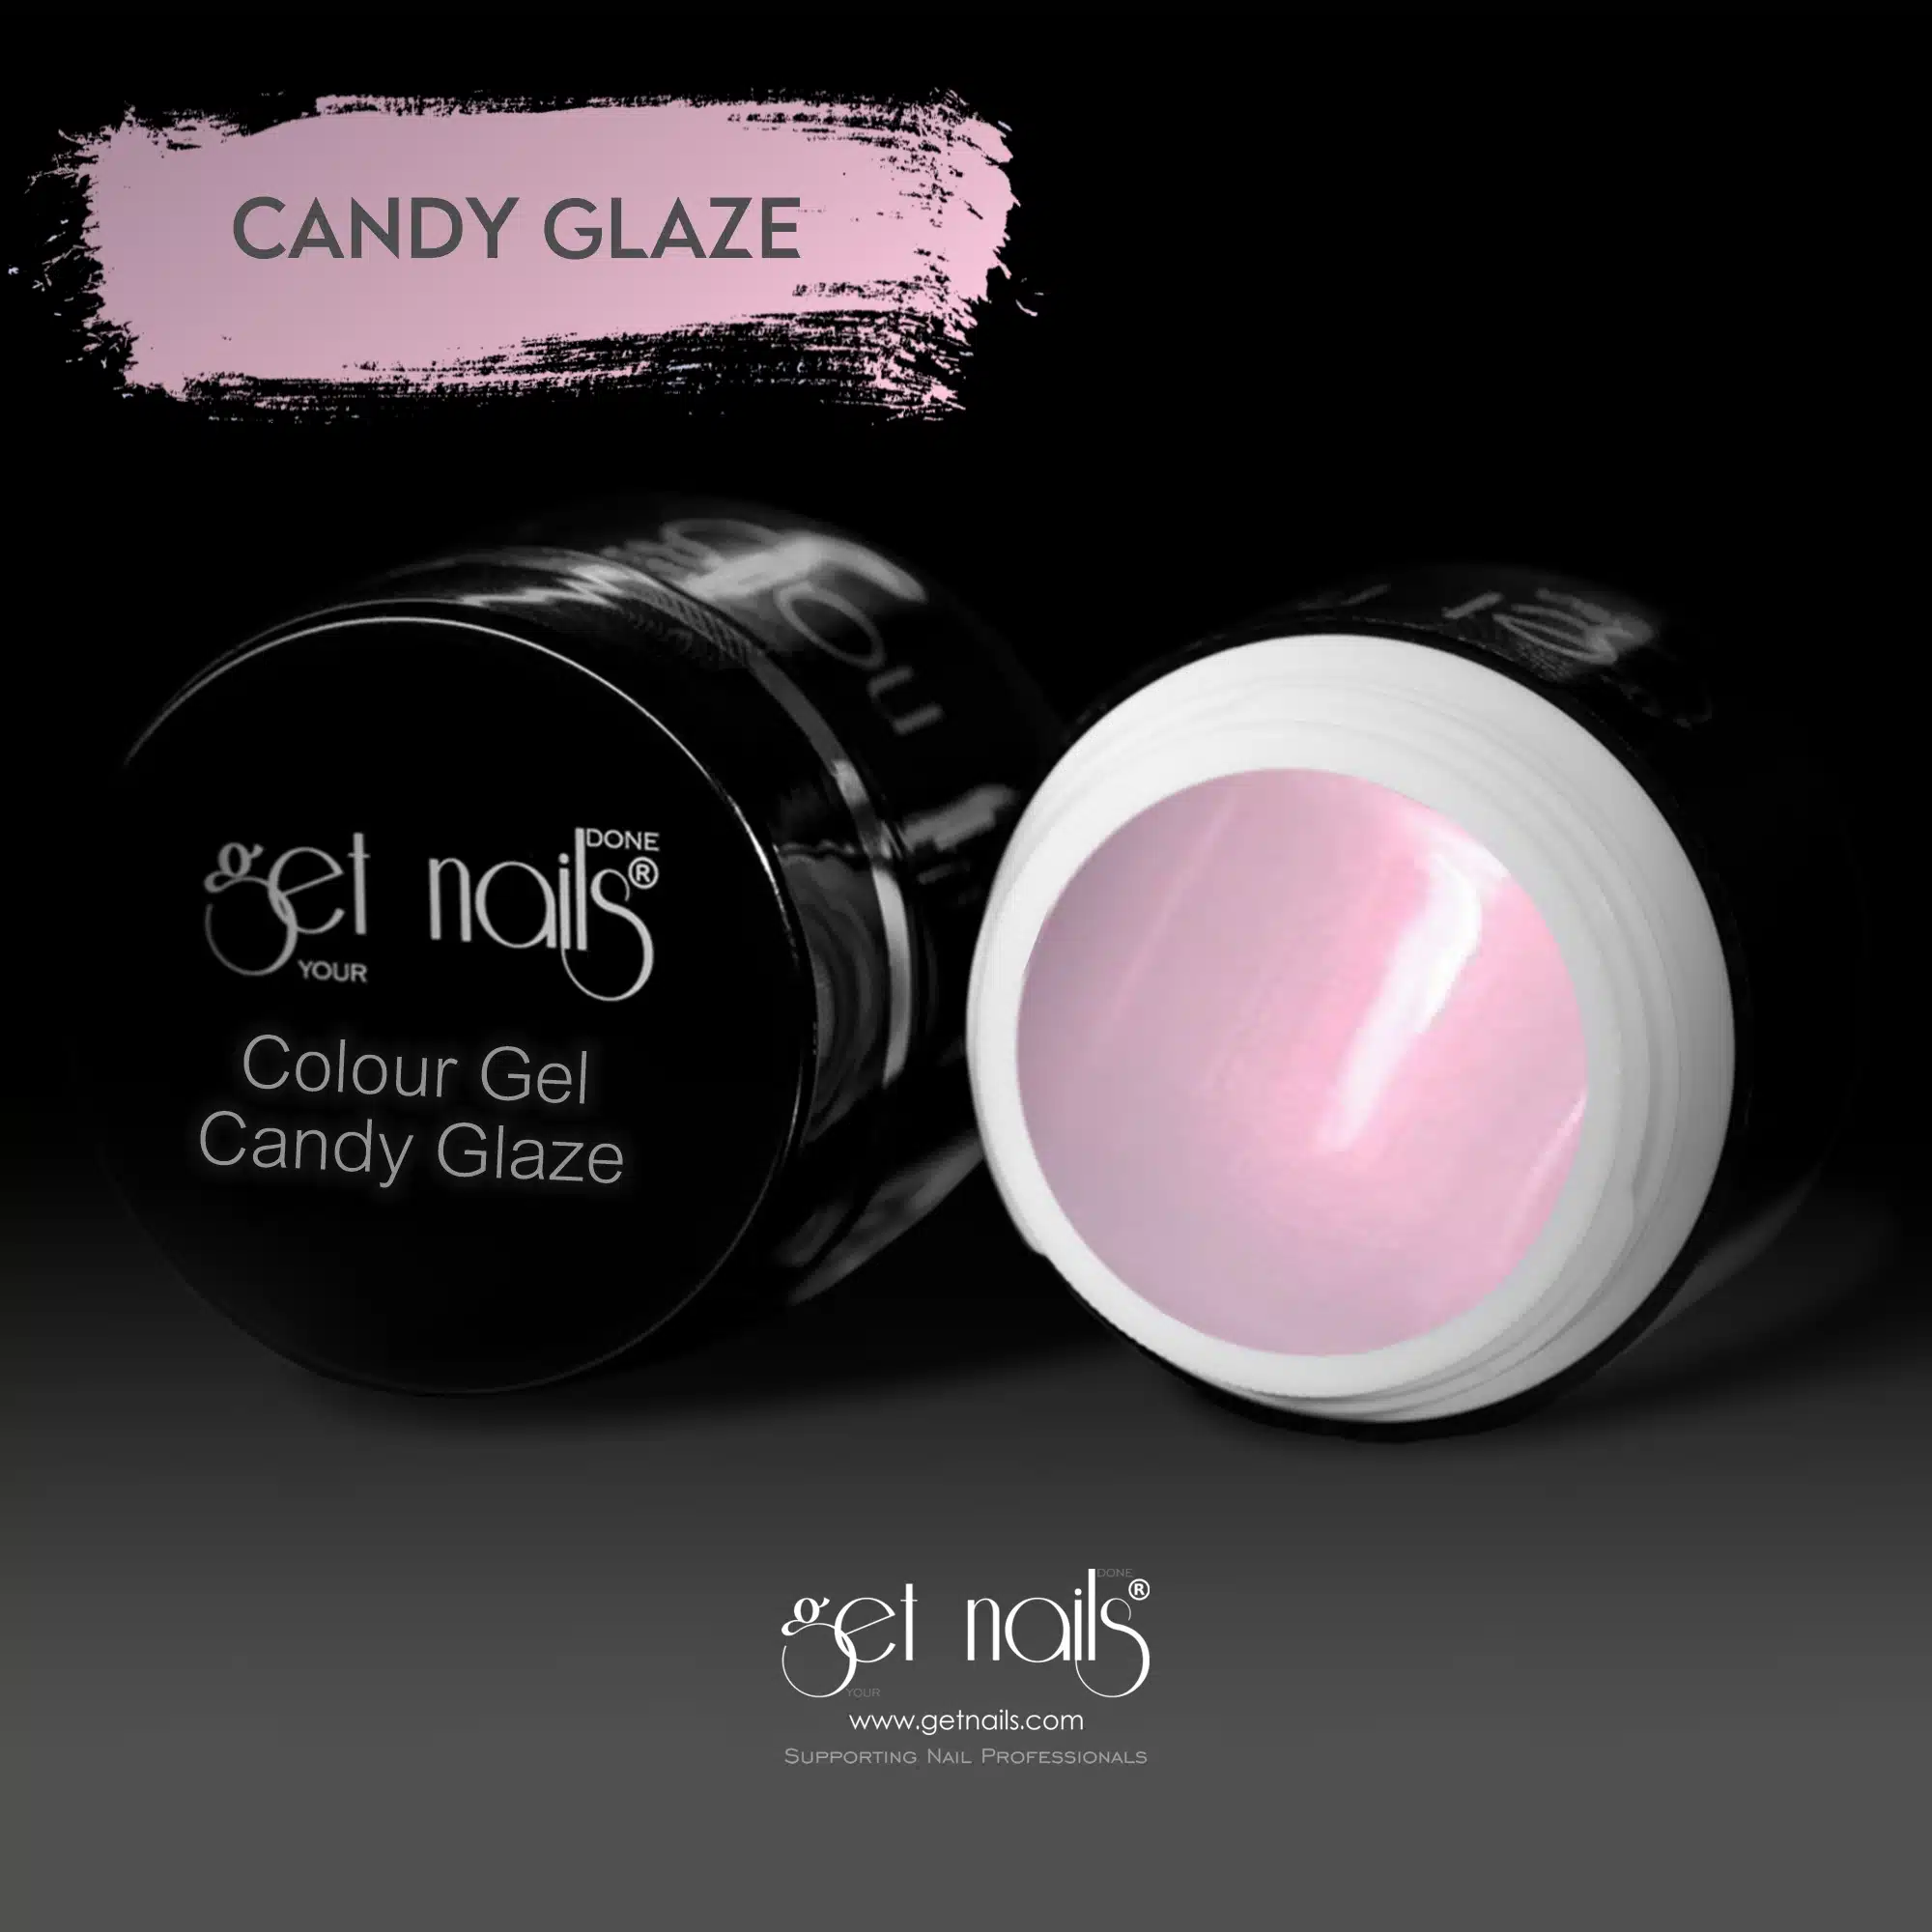 Get Nails Austria - Цветной гель Candy Glaze 5g